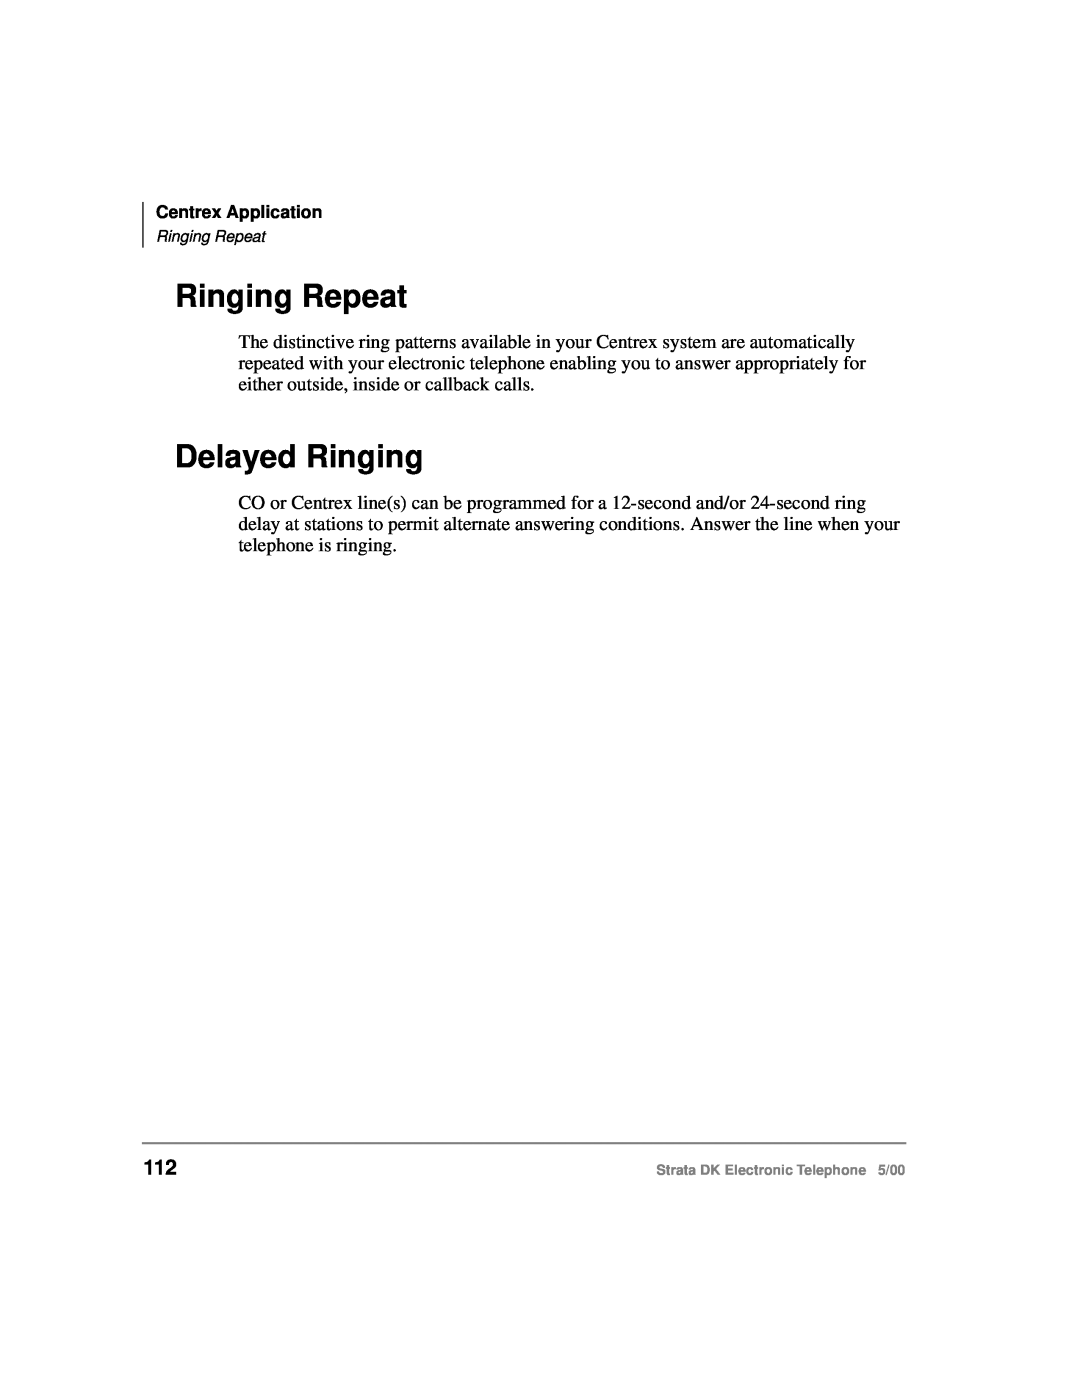 Toshiba Strata DK manual Ringing Repeat, Delayed Ringing, Centrex Application 